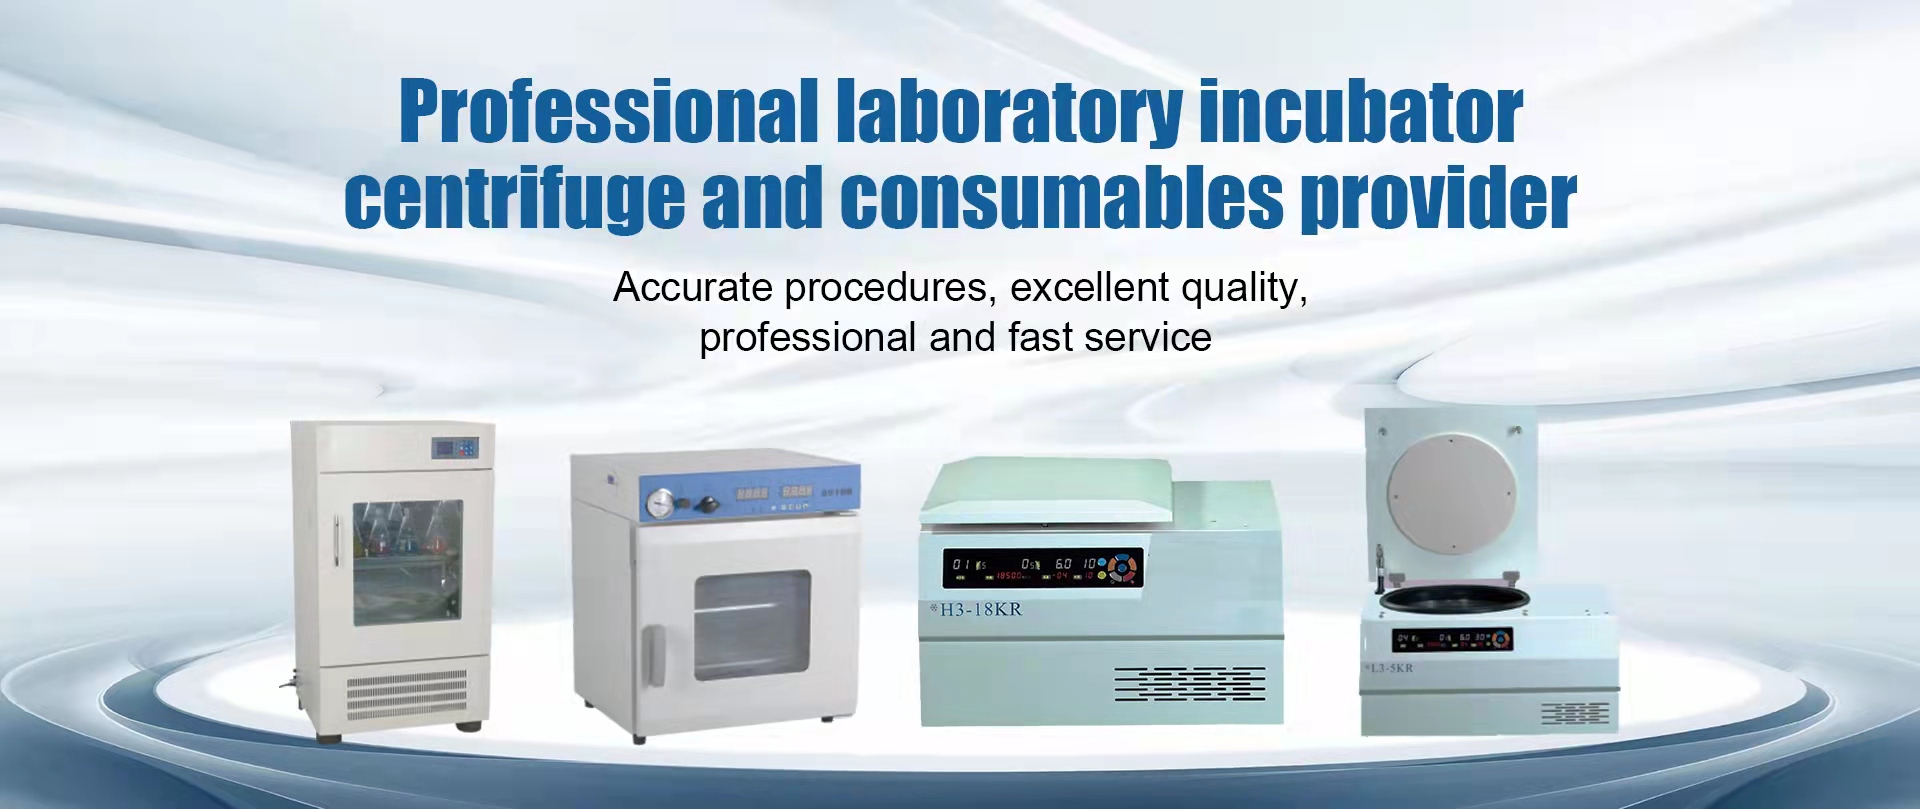 Professsional laboratory incubator, centrifuge and consumables provider